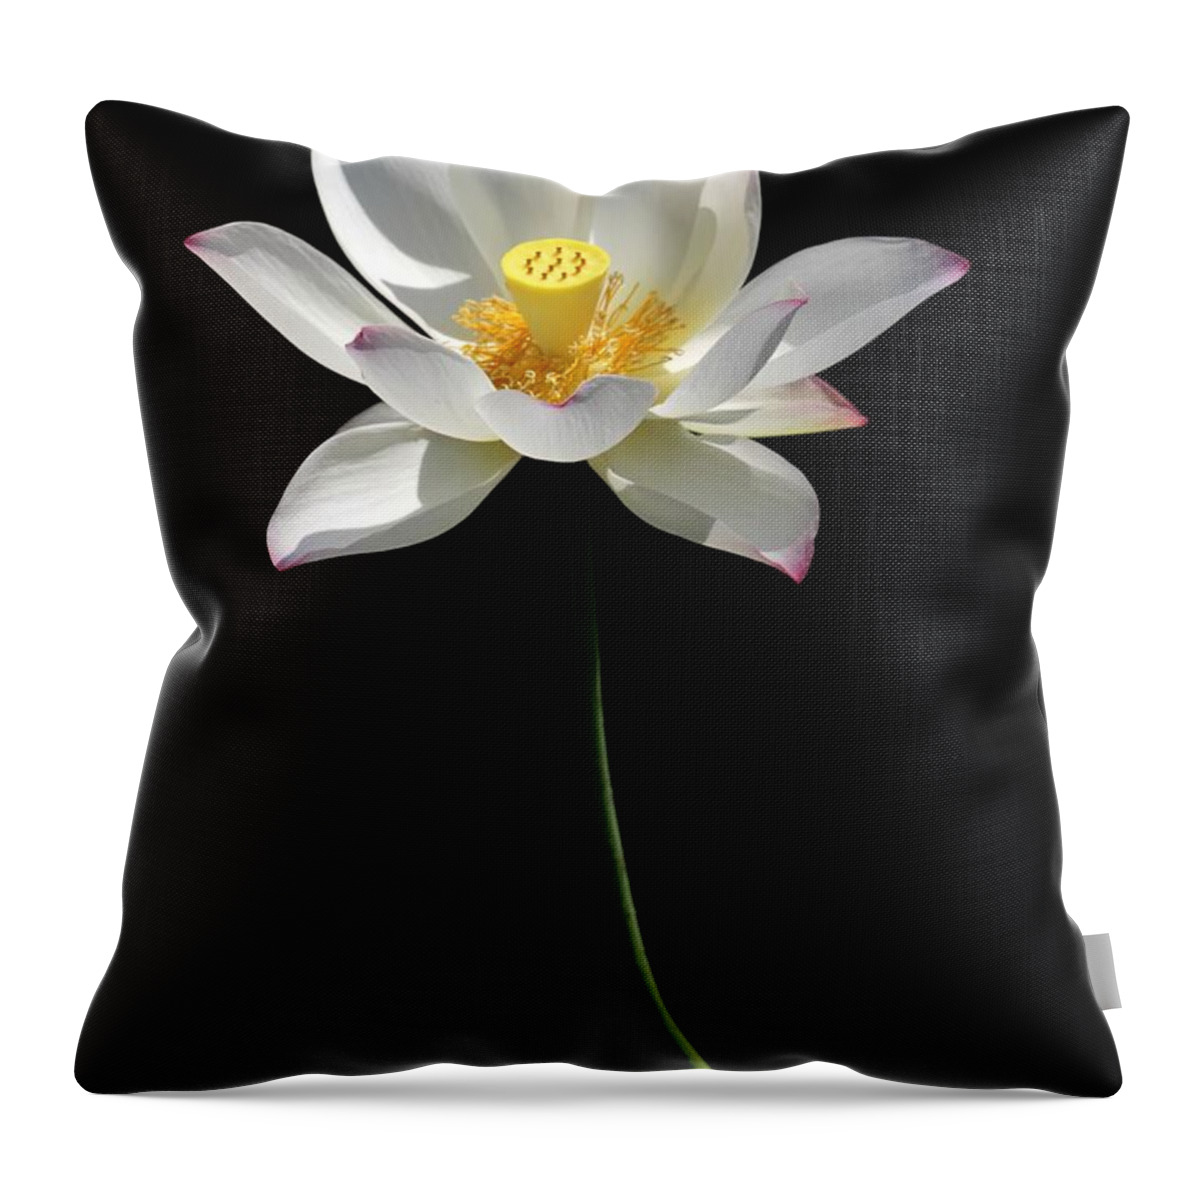 Lotus Throw Pillow featuring the photograph Grand Lotus by Sabrina L Ryan